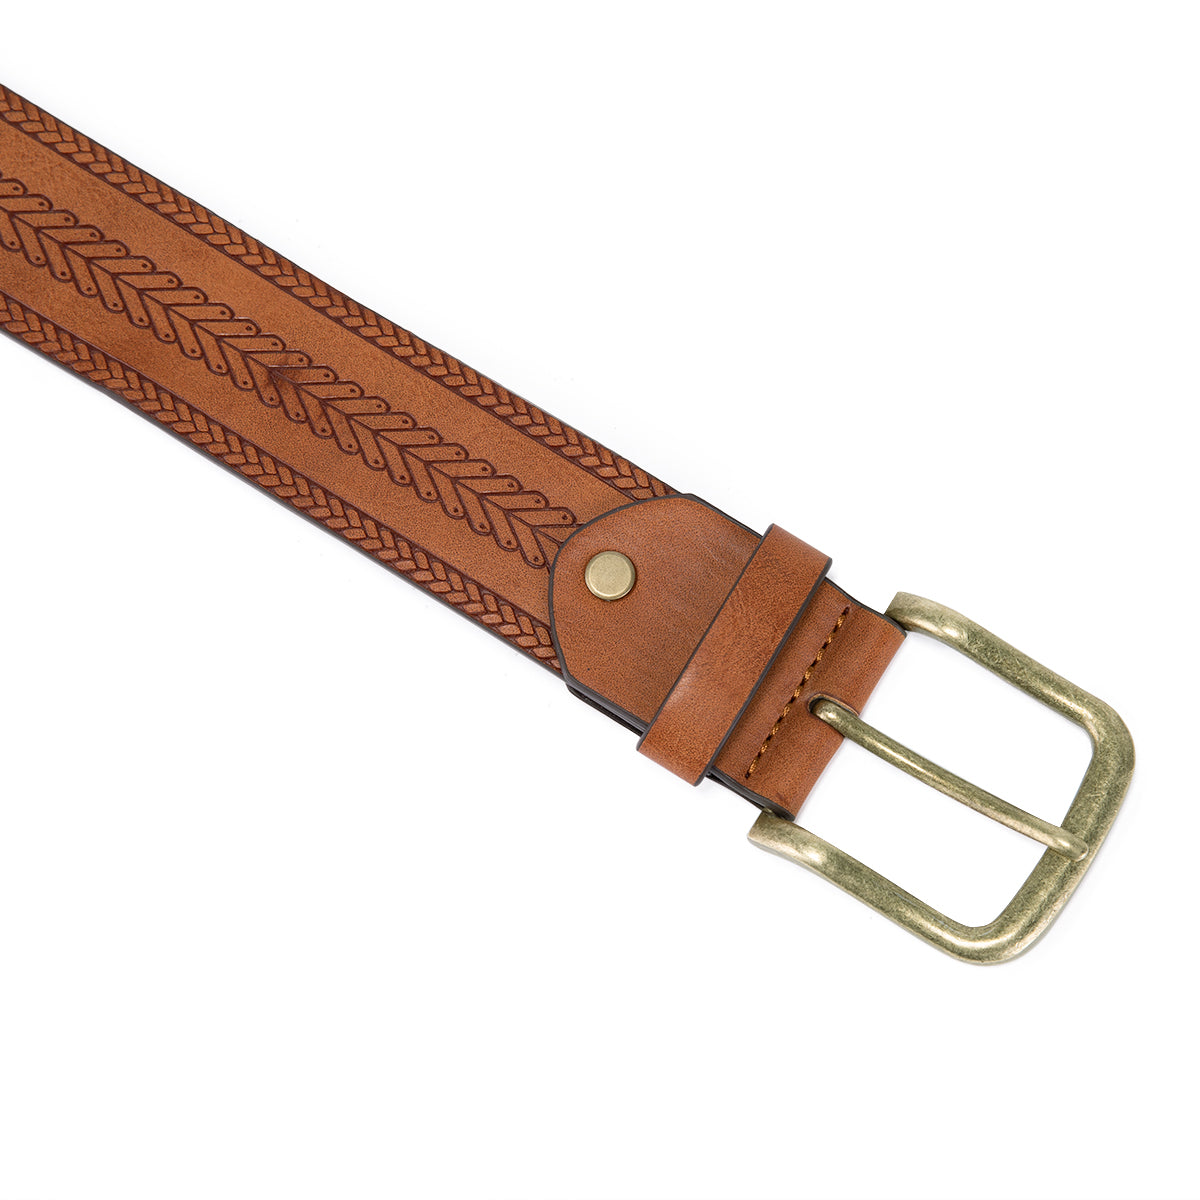 Herringbone Embossed leather Belt